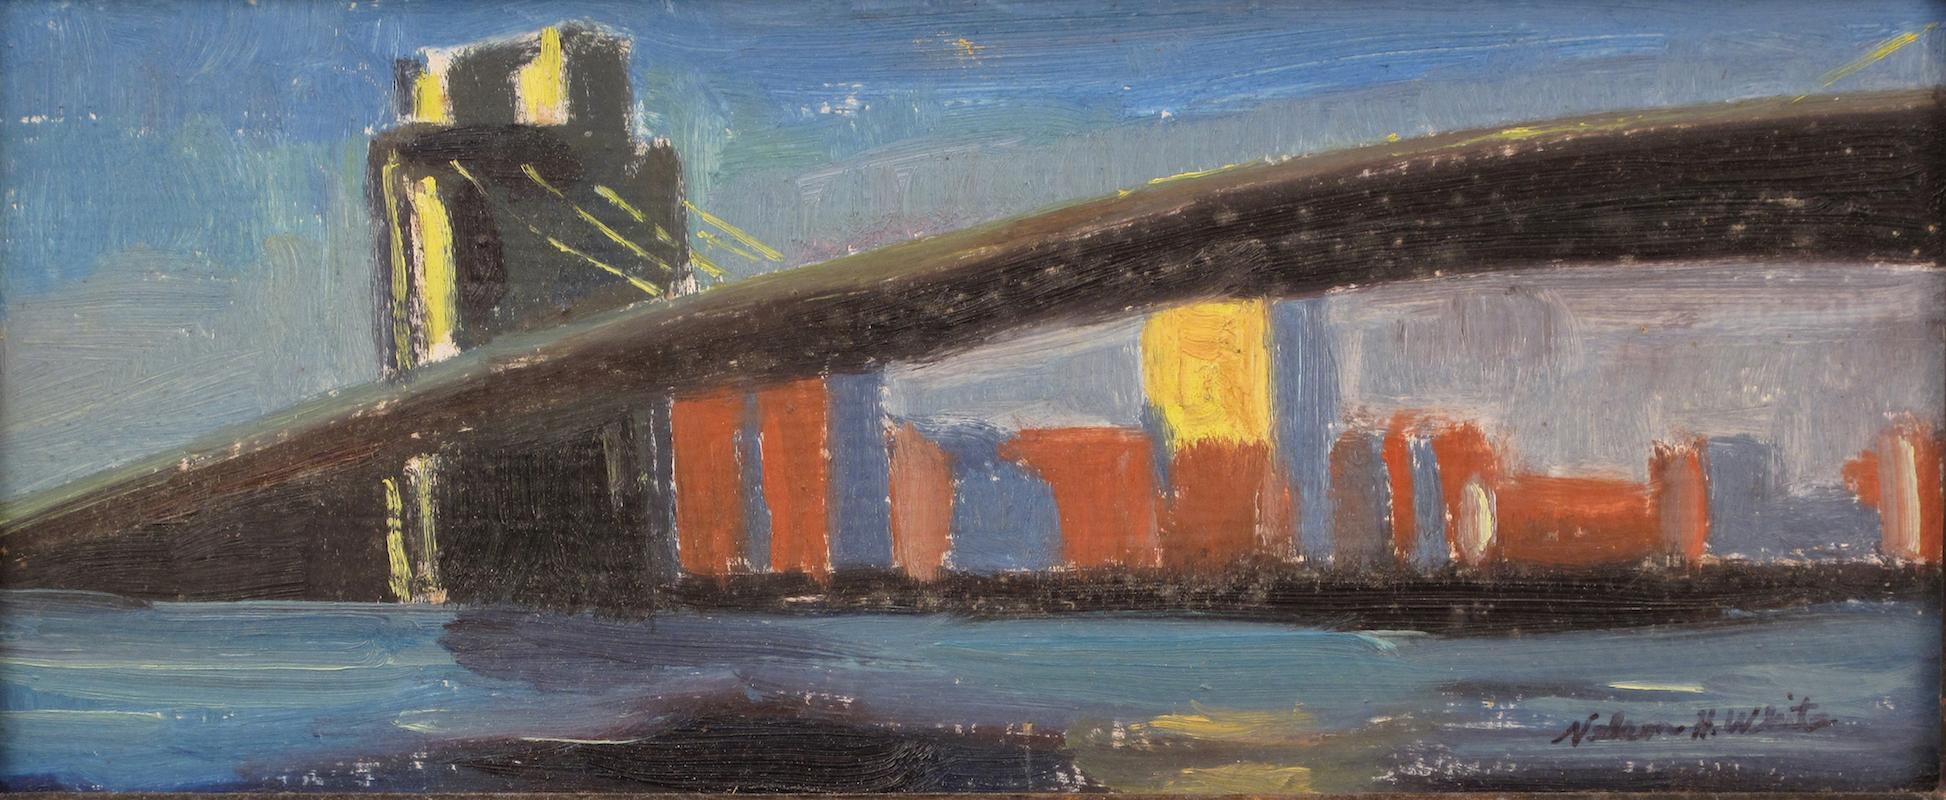 Brooklyn Bridge III 01.30.2011 - Art by Nelson White